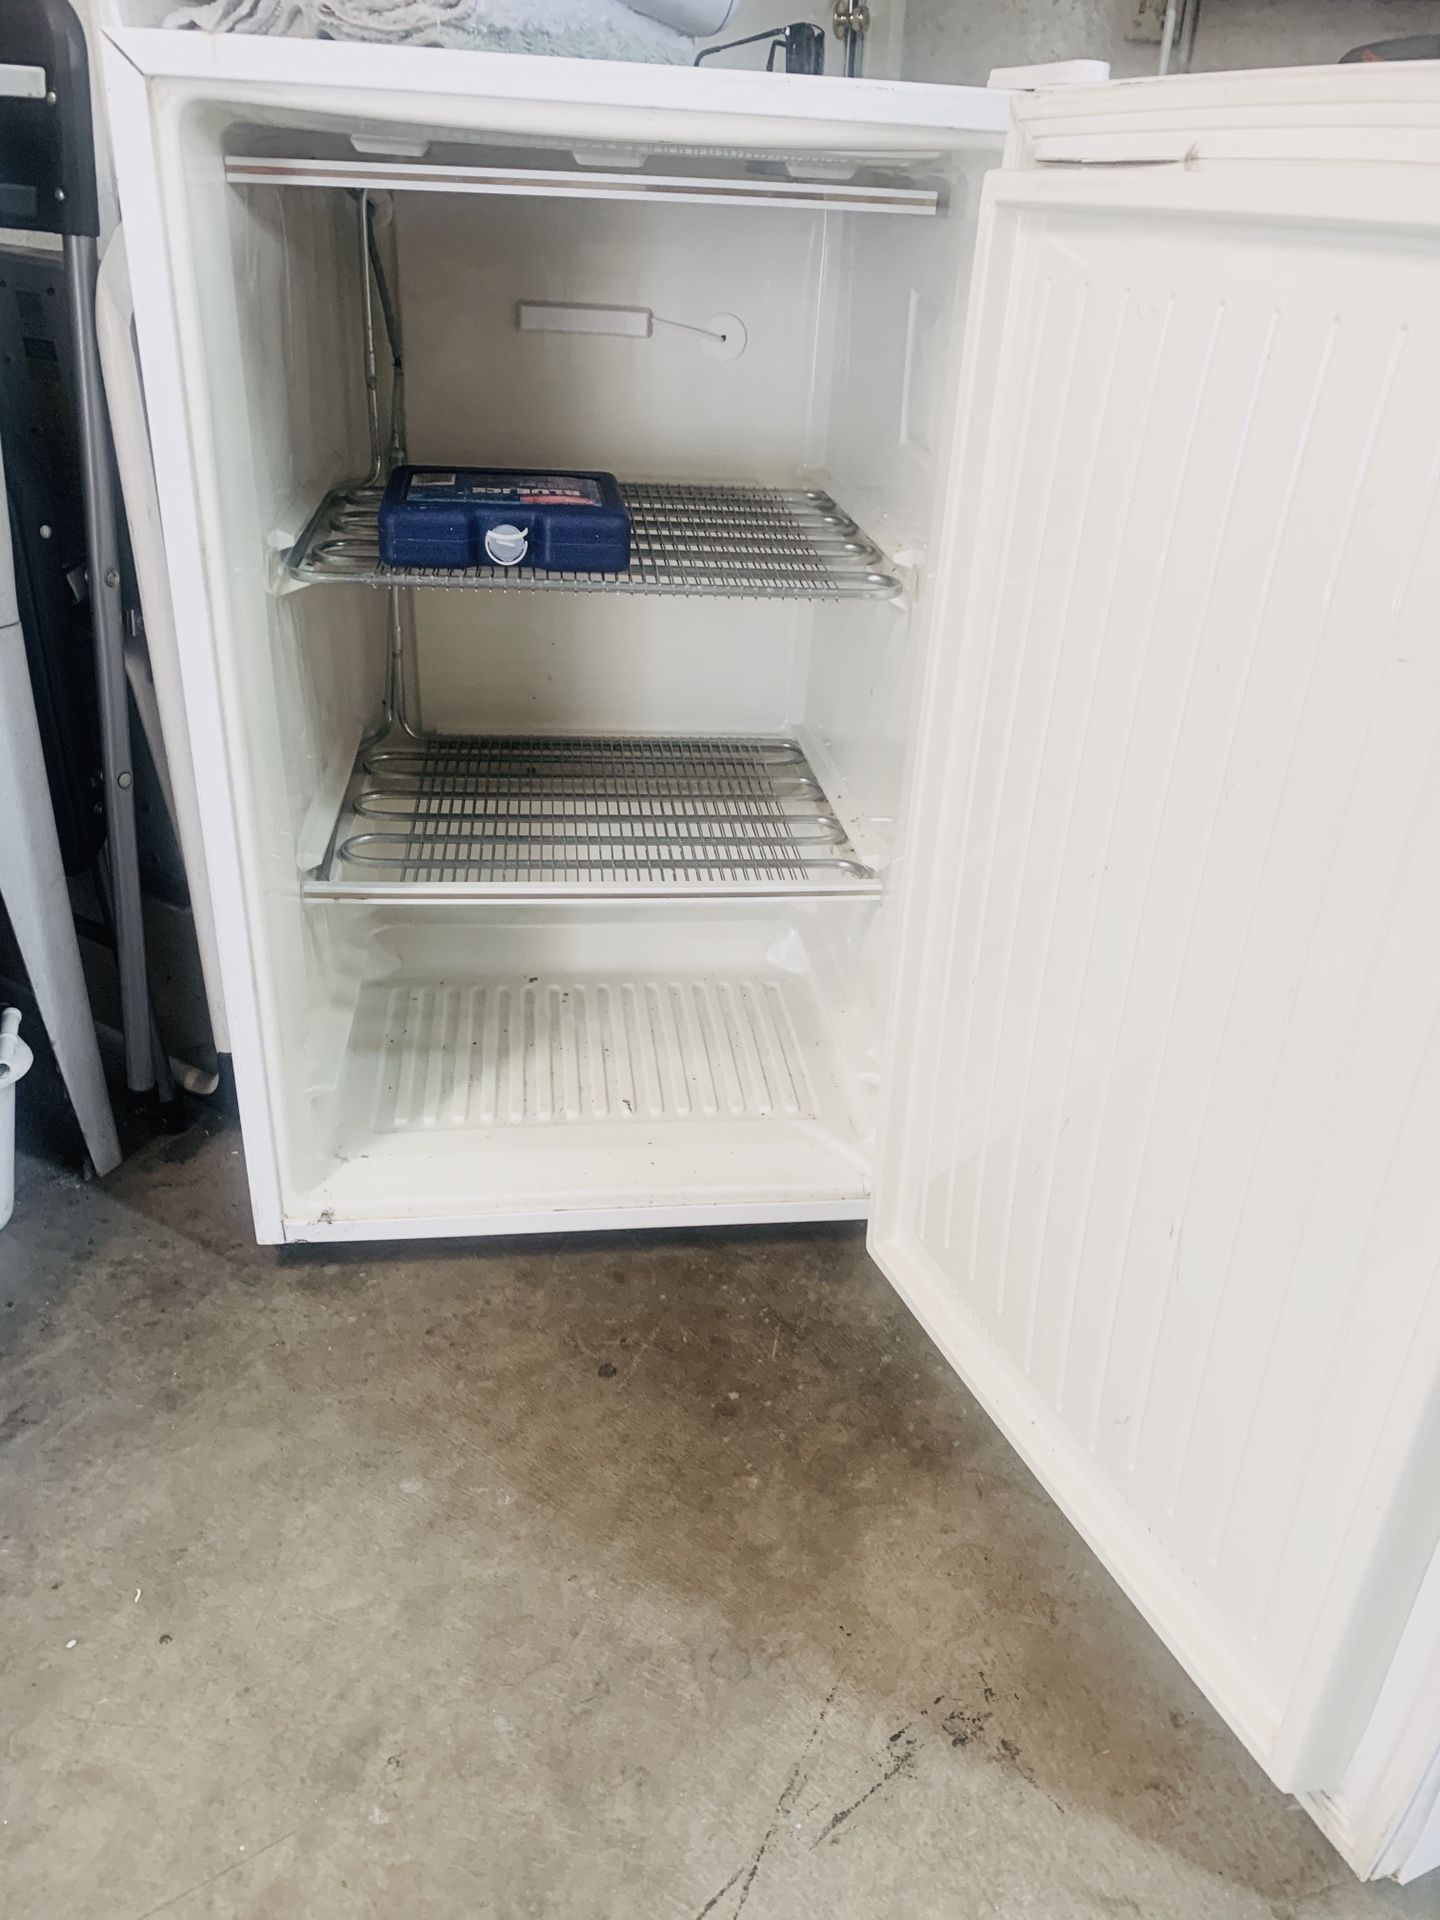 Kenmore upright compact freezer